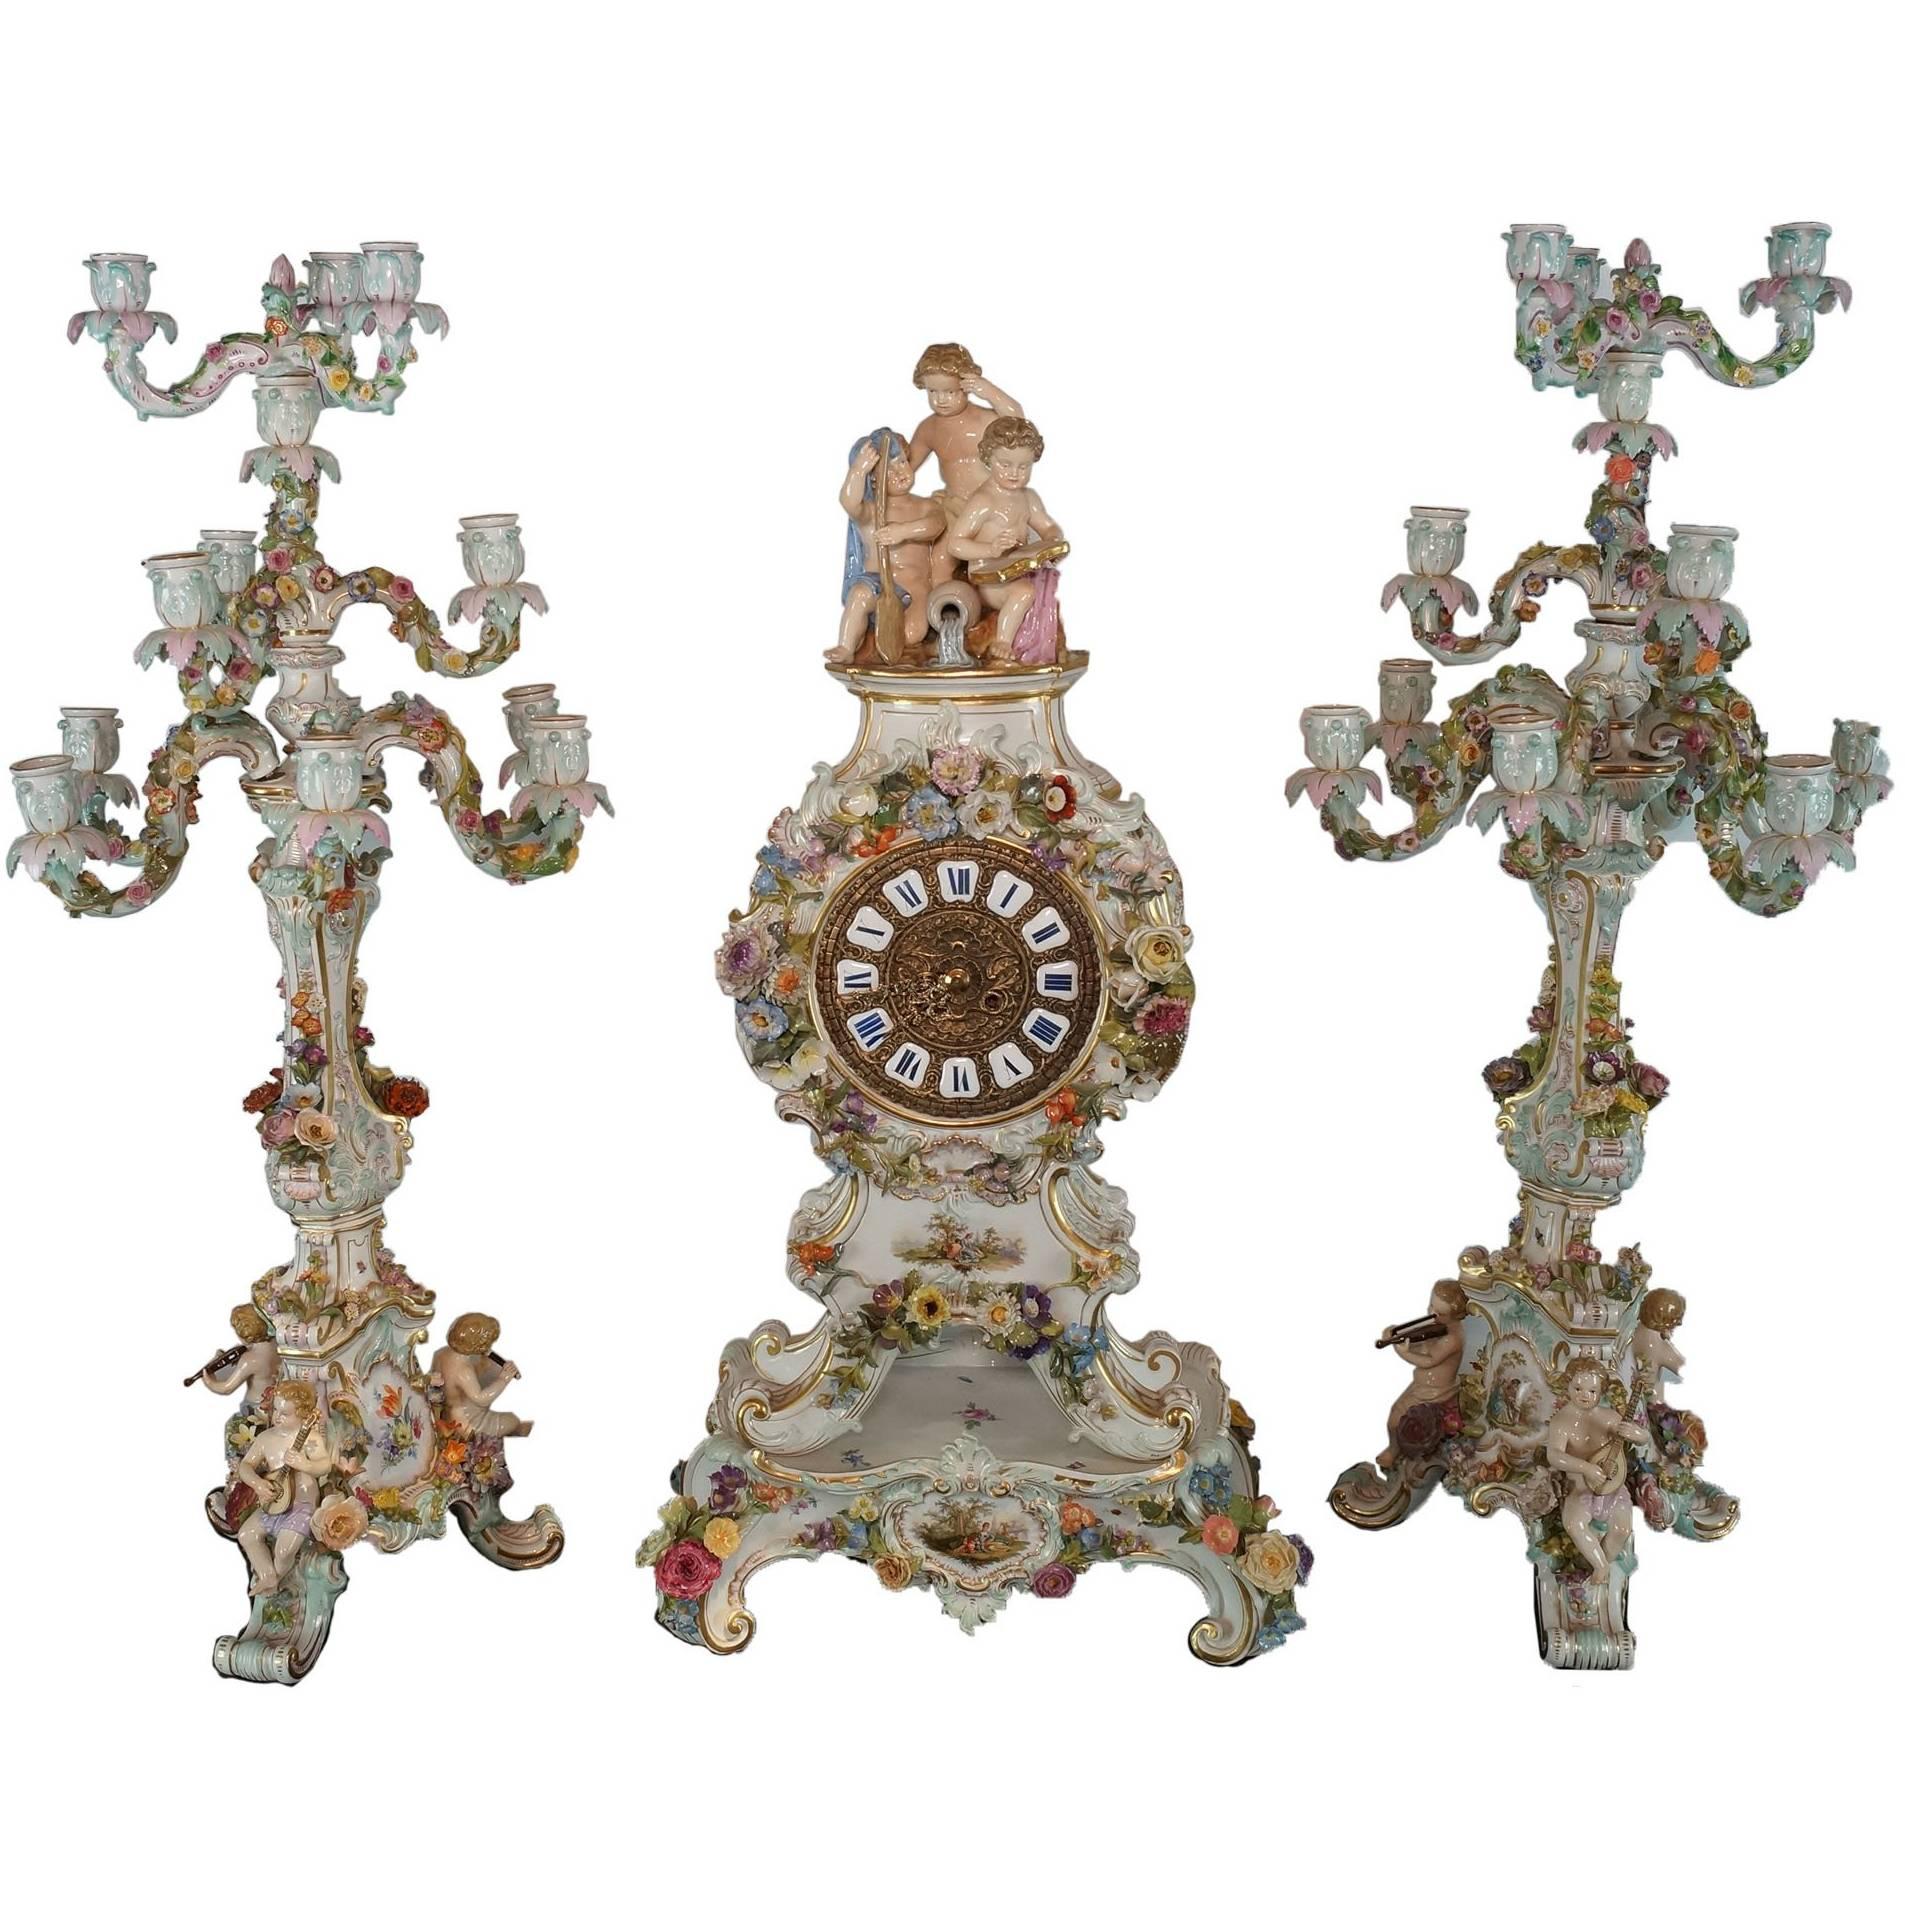 Very Large Three-Piece Meissen Porcelain Figural Flower Encrusted Clock Set